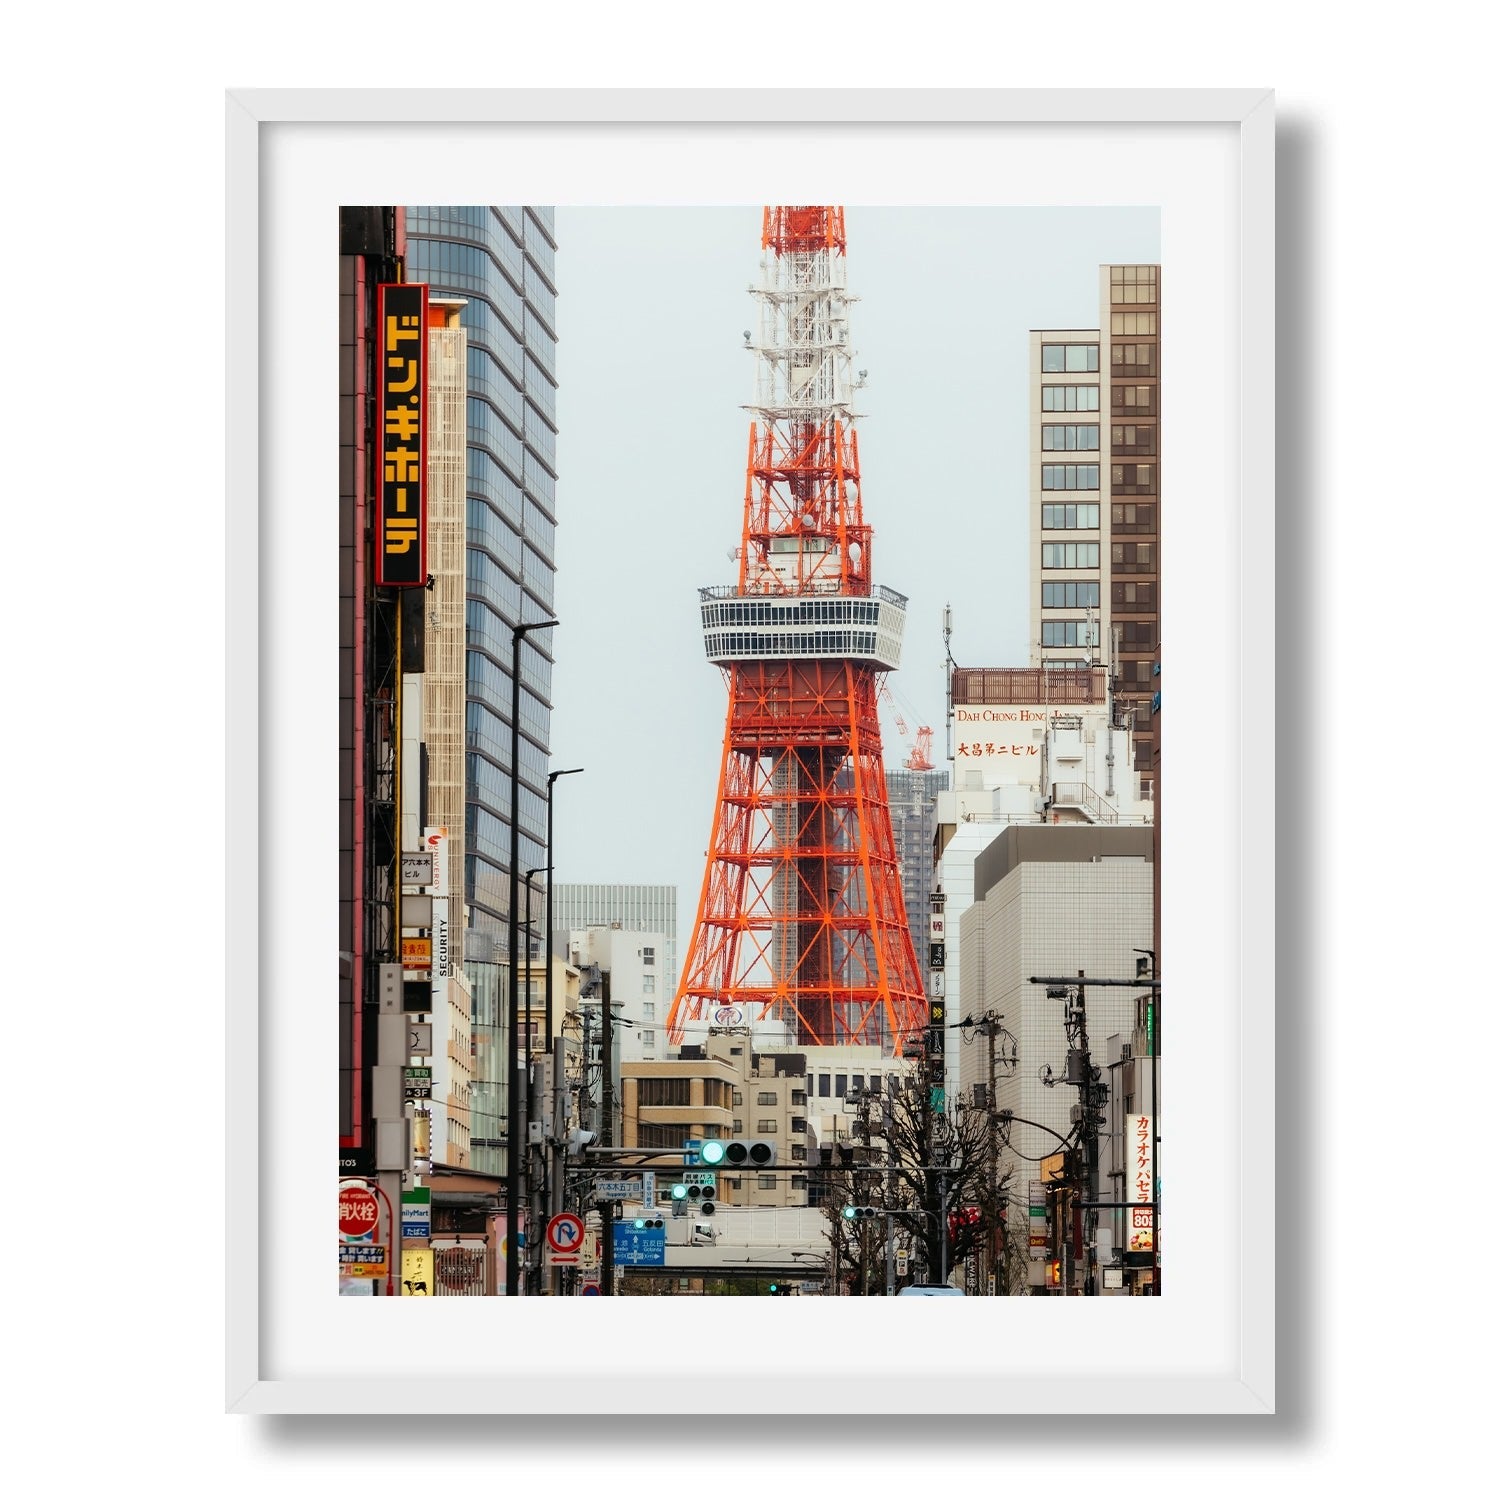 Tokyo Tower Roppongi Street - Peter Yan Studio